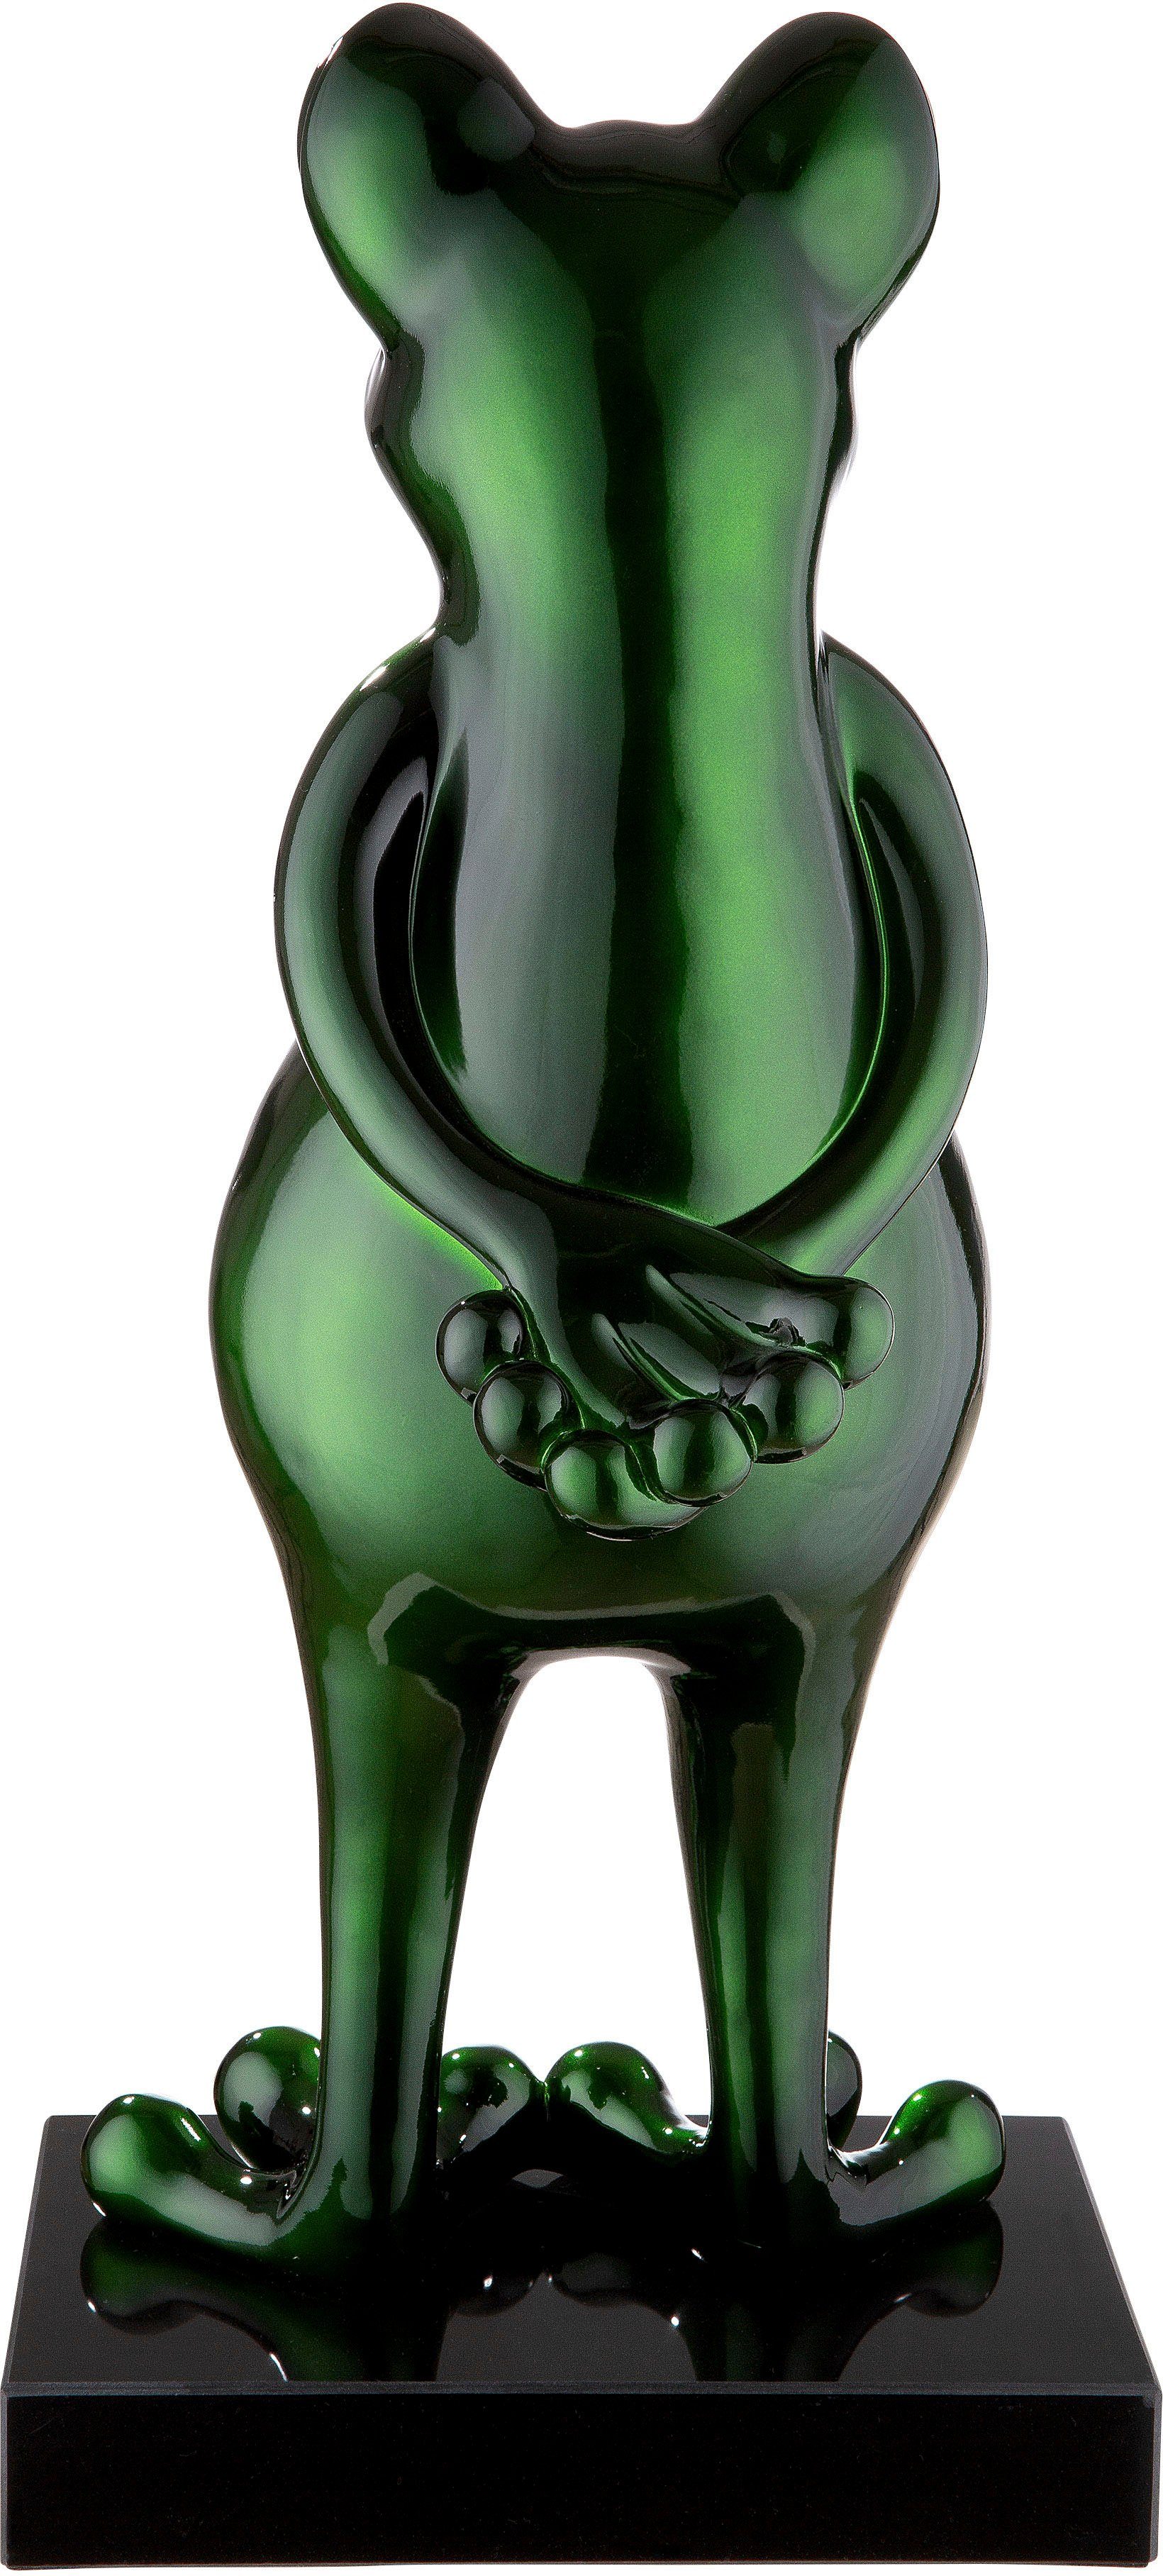 Casablanca by Gilde Tierfigur Skulptur auf (1 Frog St), Marmorbase grün